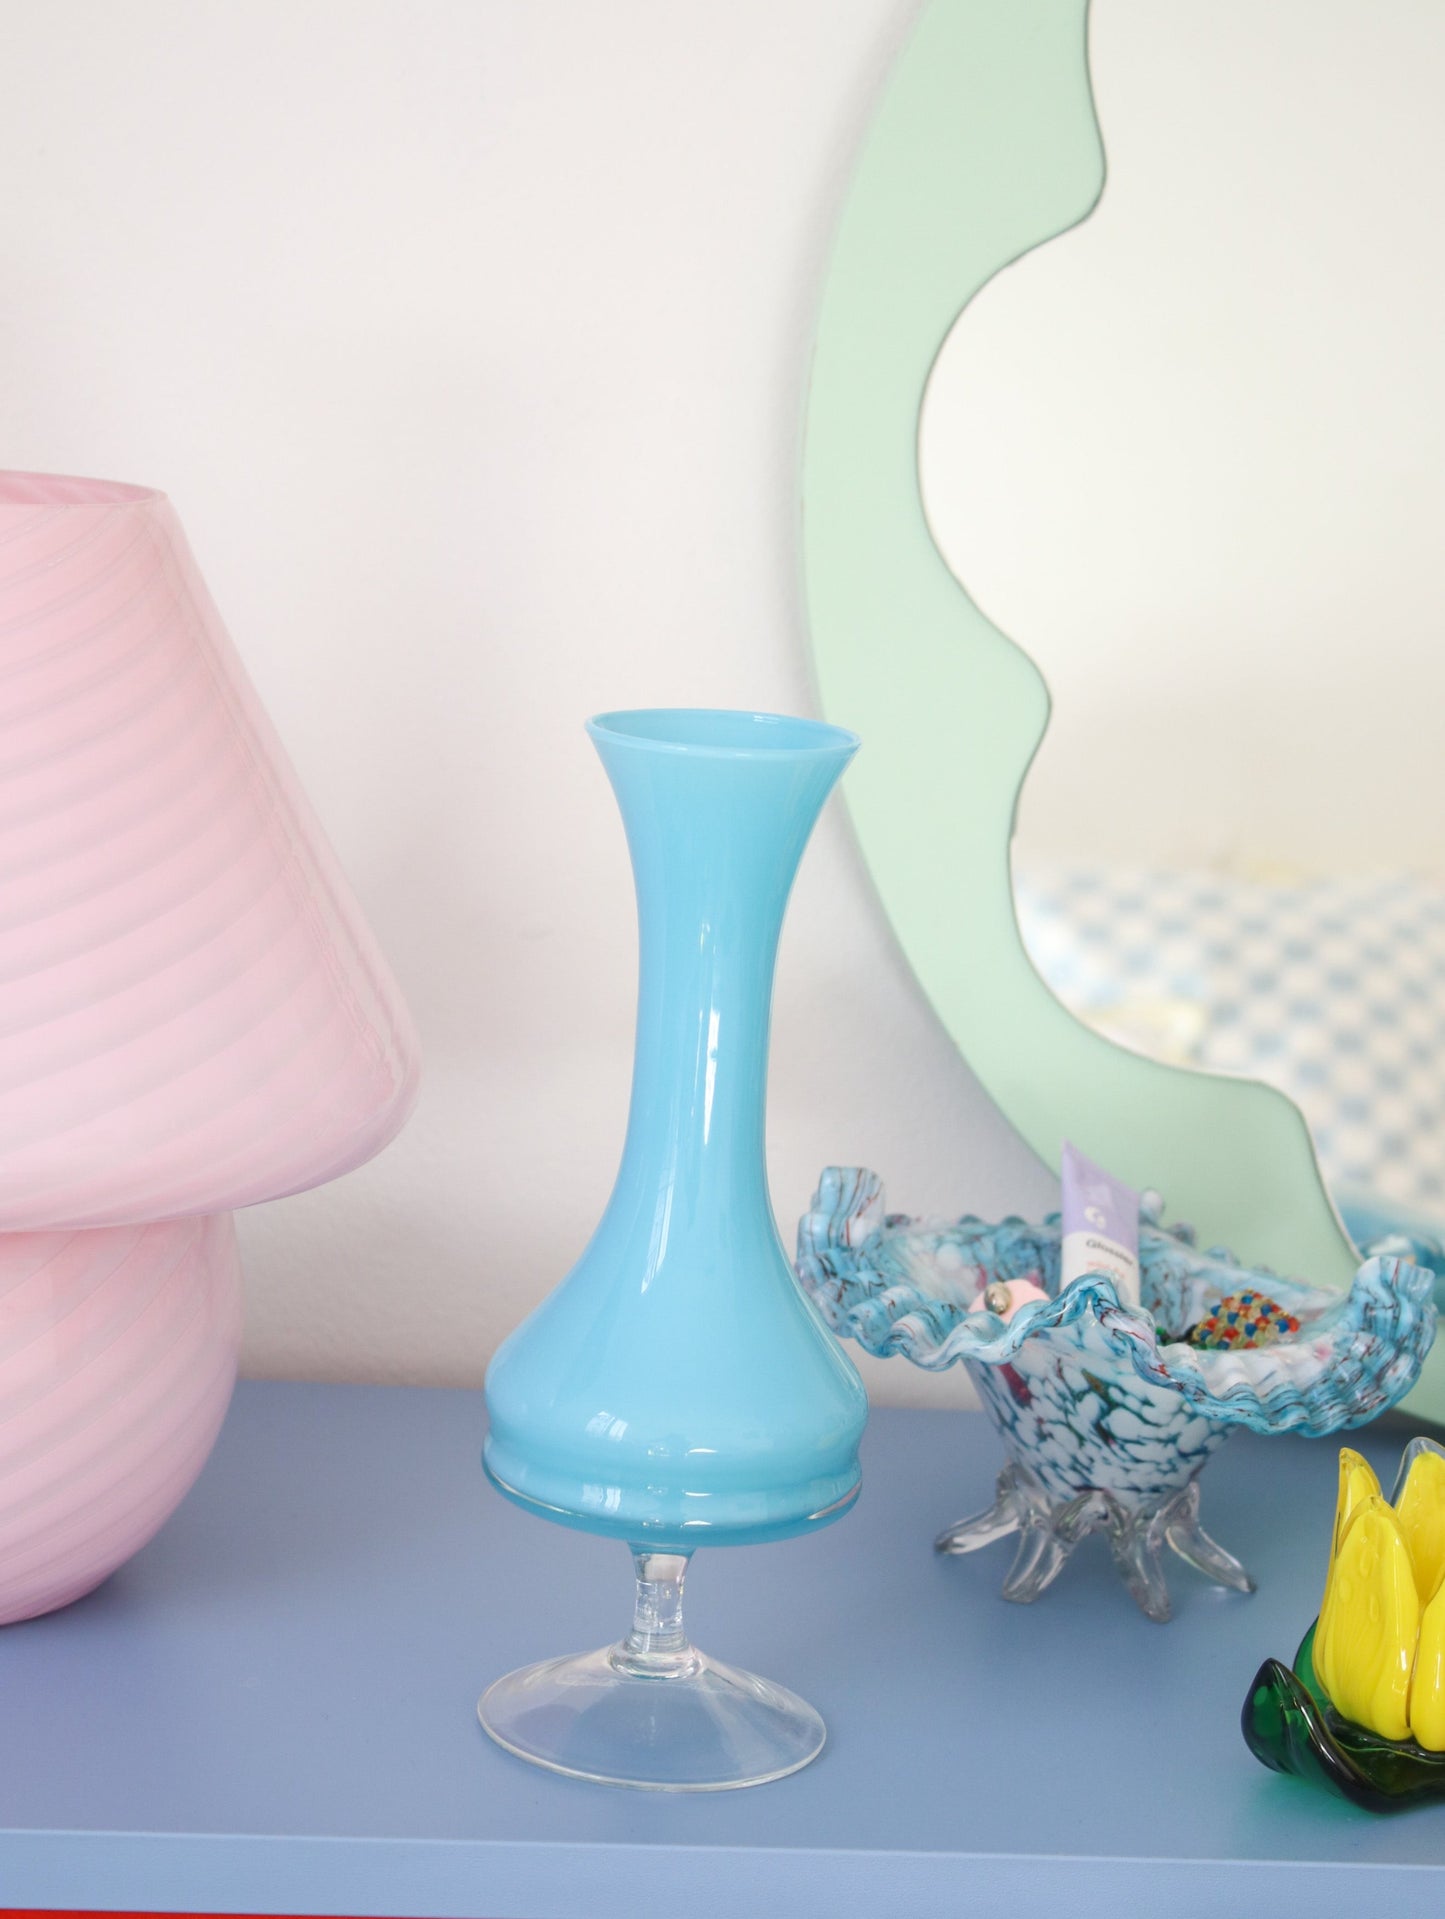 Vase opaline bleu corps cylindrique